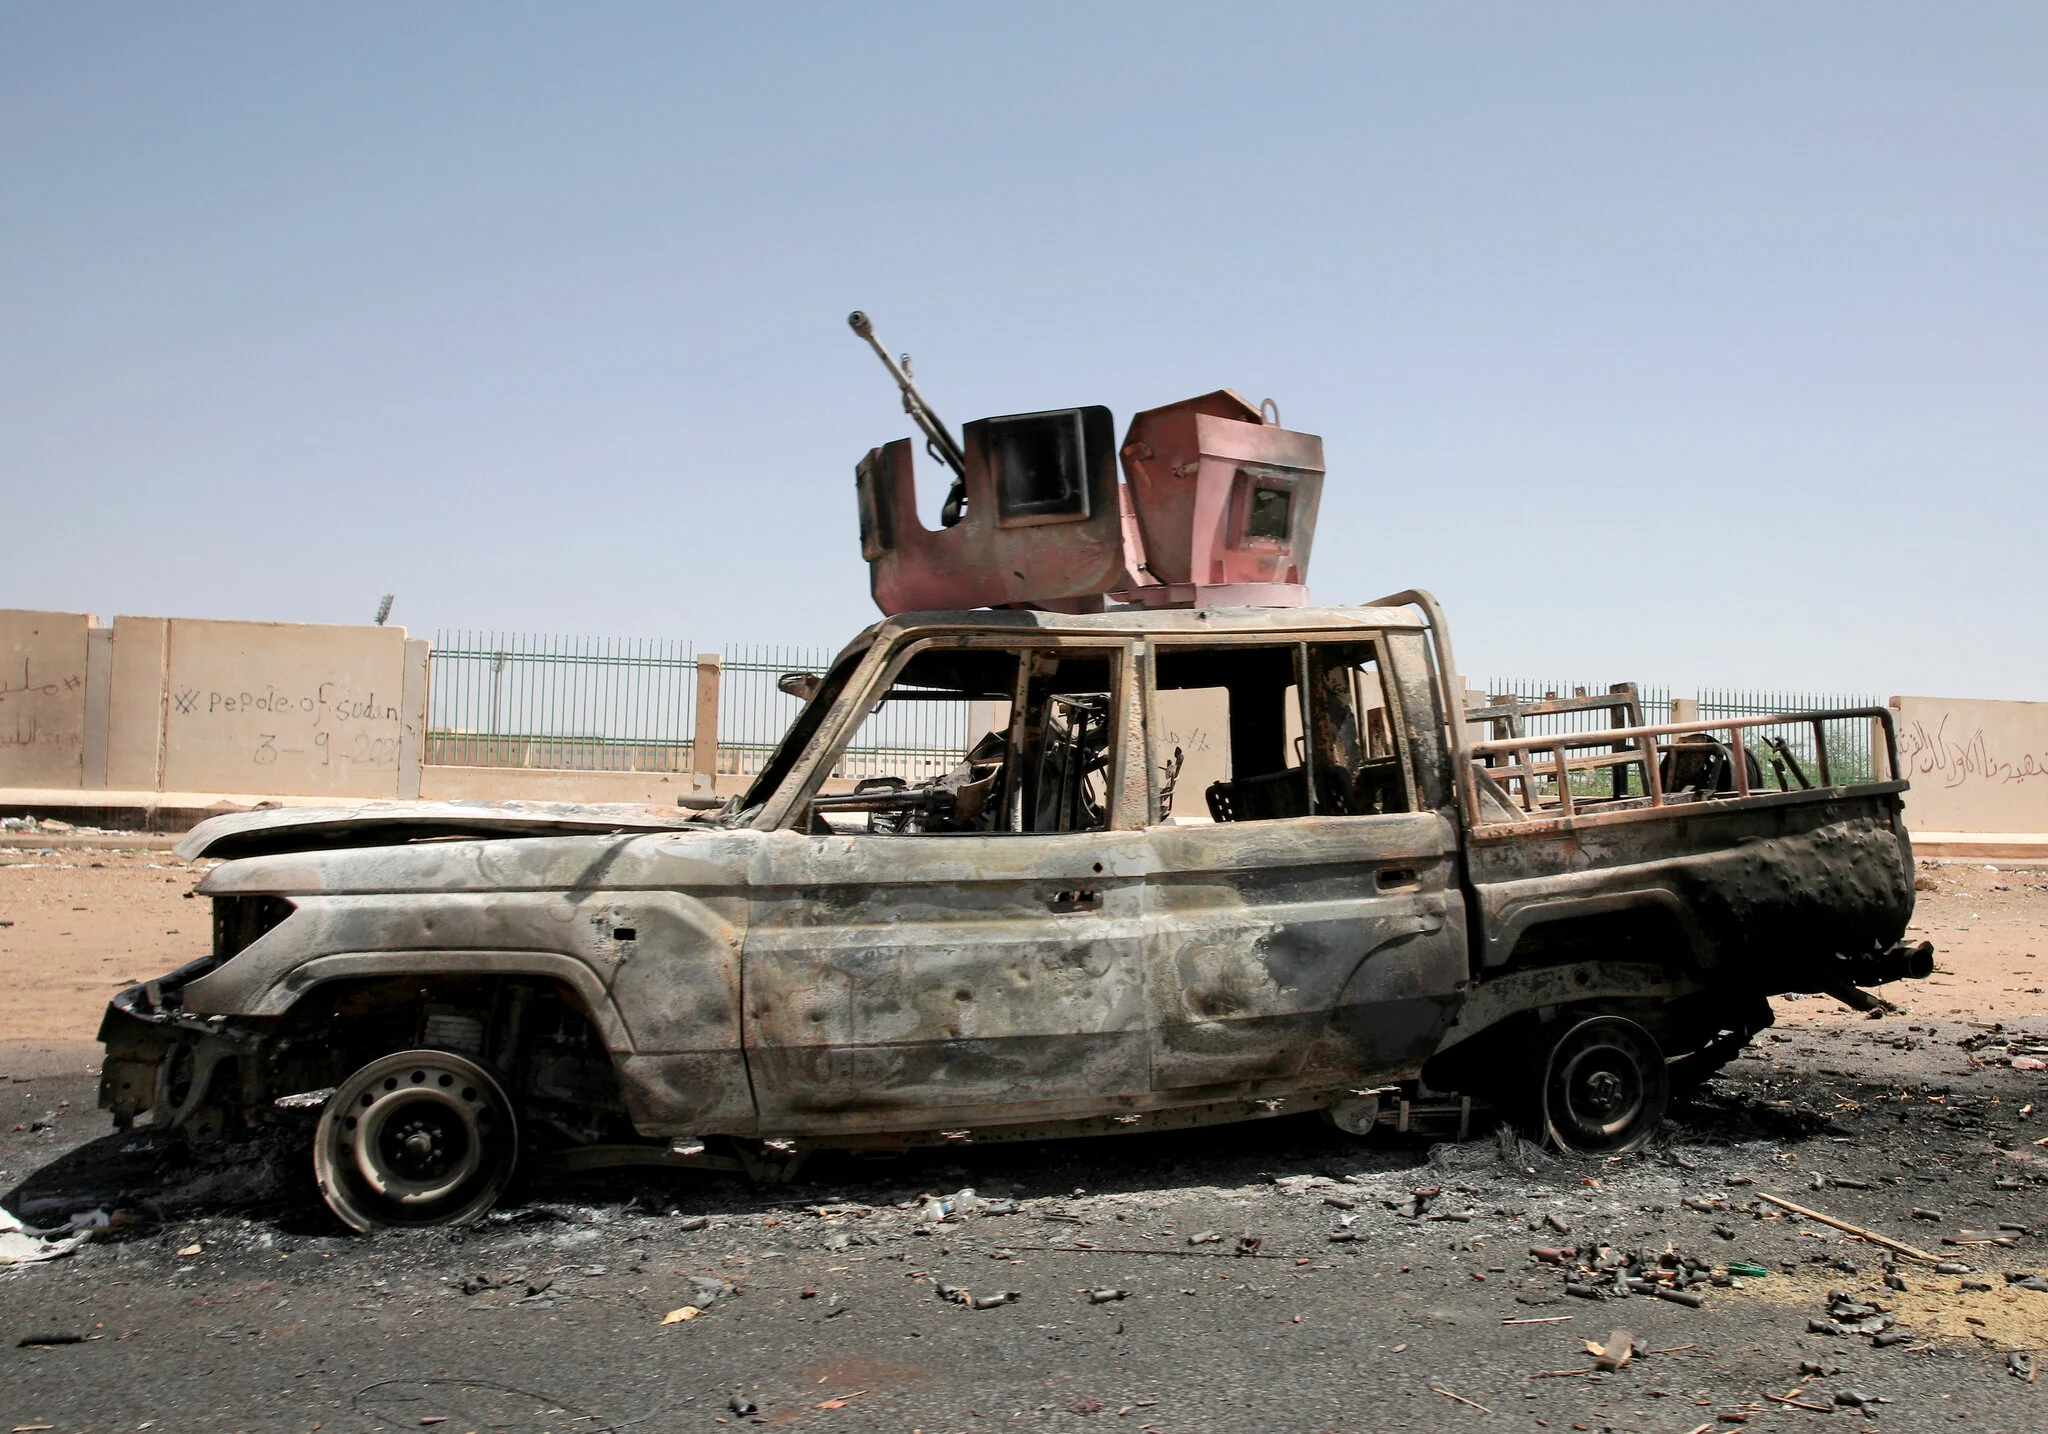 Conflict in the Sudan